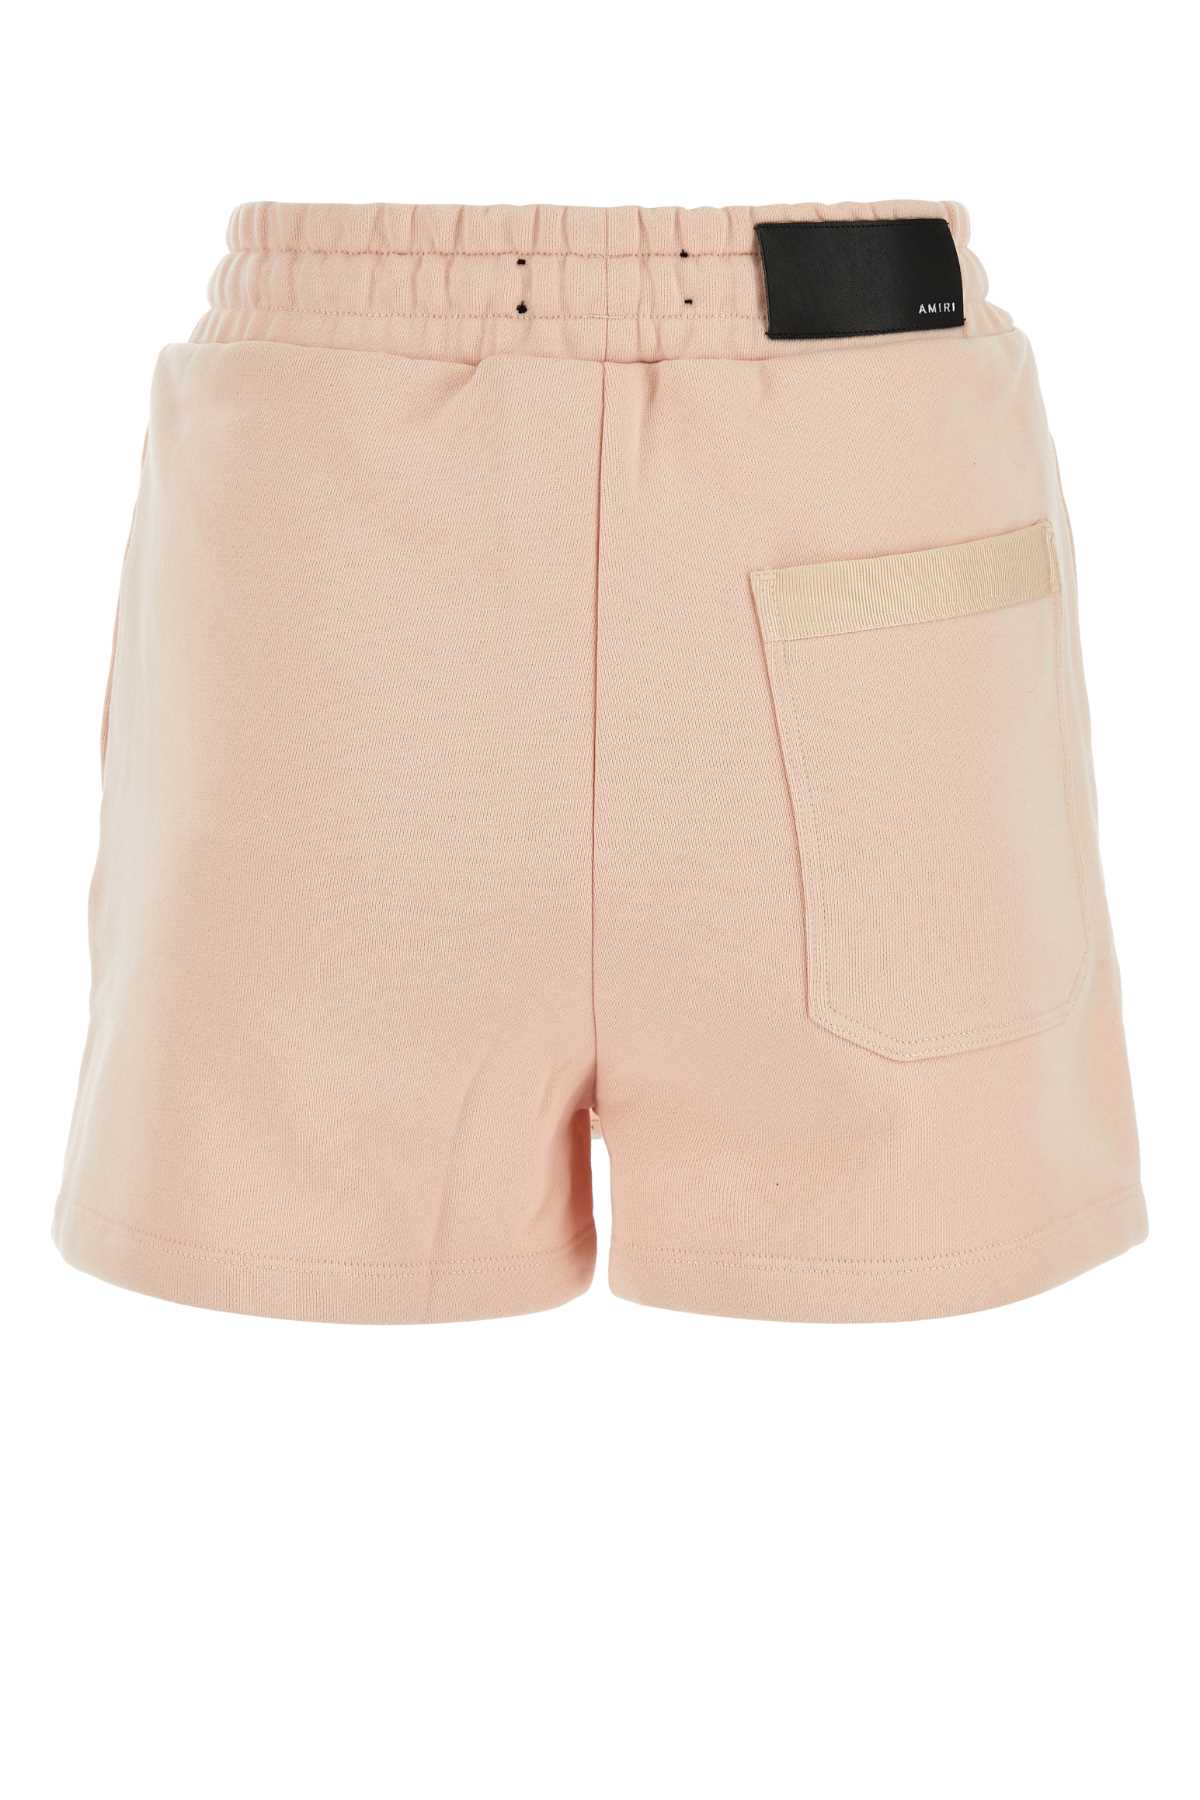 Amiri Pastel Pink Cotton Shorts In Creamtan